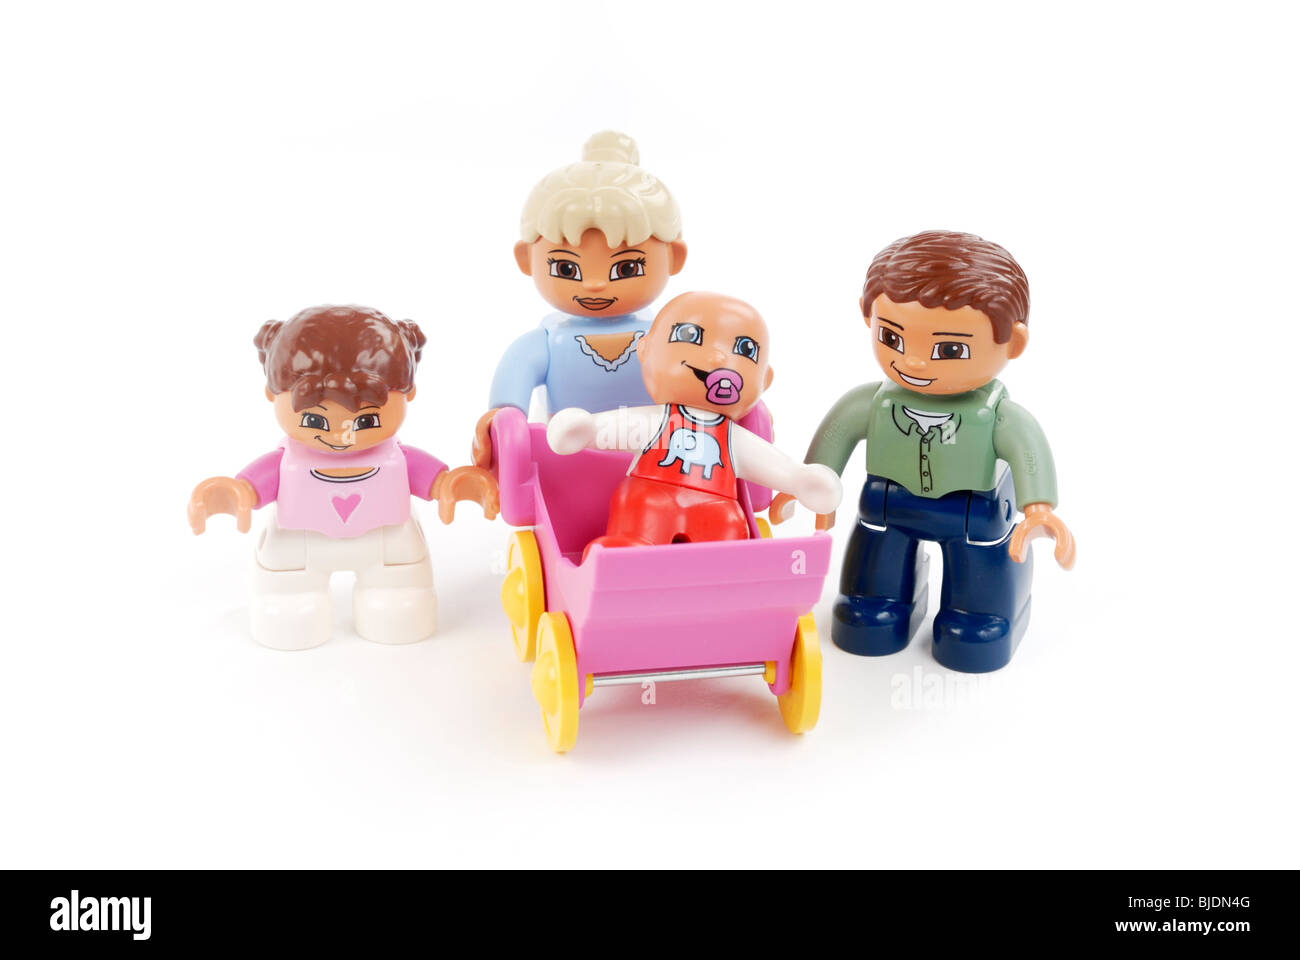 Lego Duplo family Stock Photo - Alamy